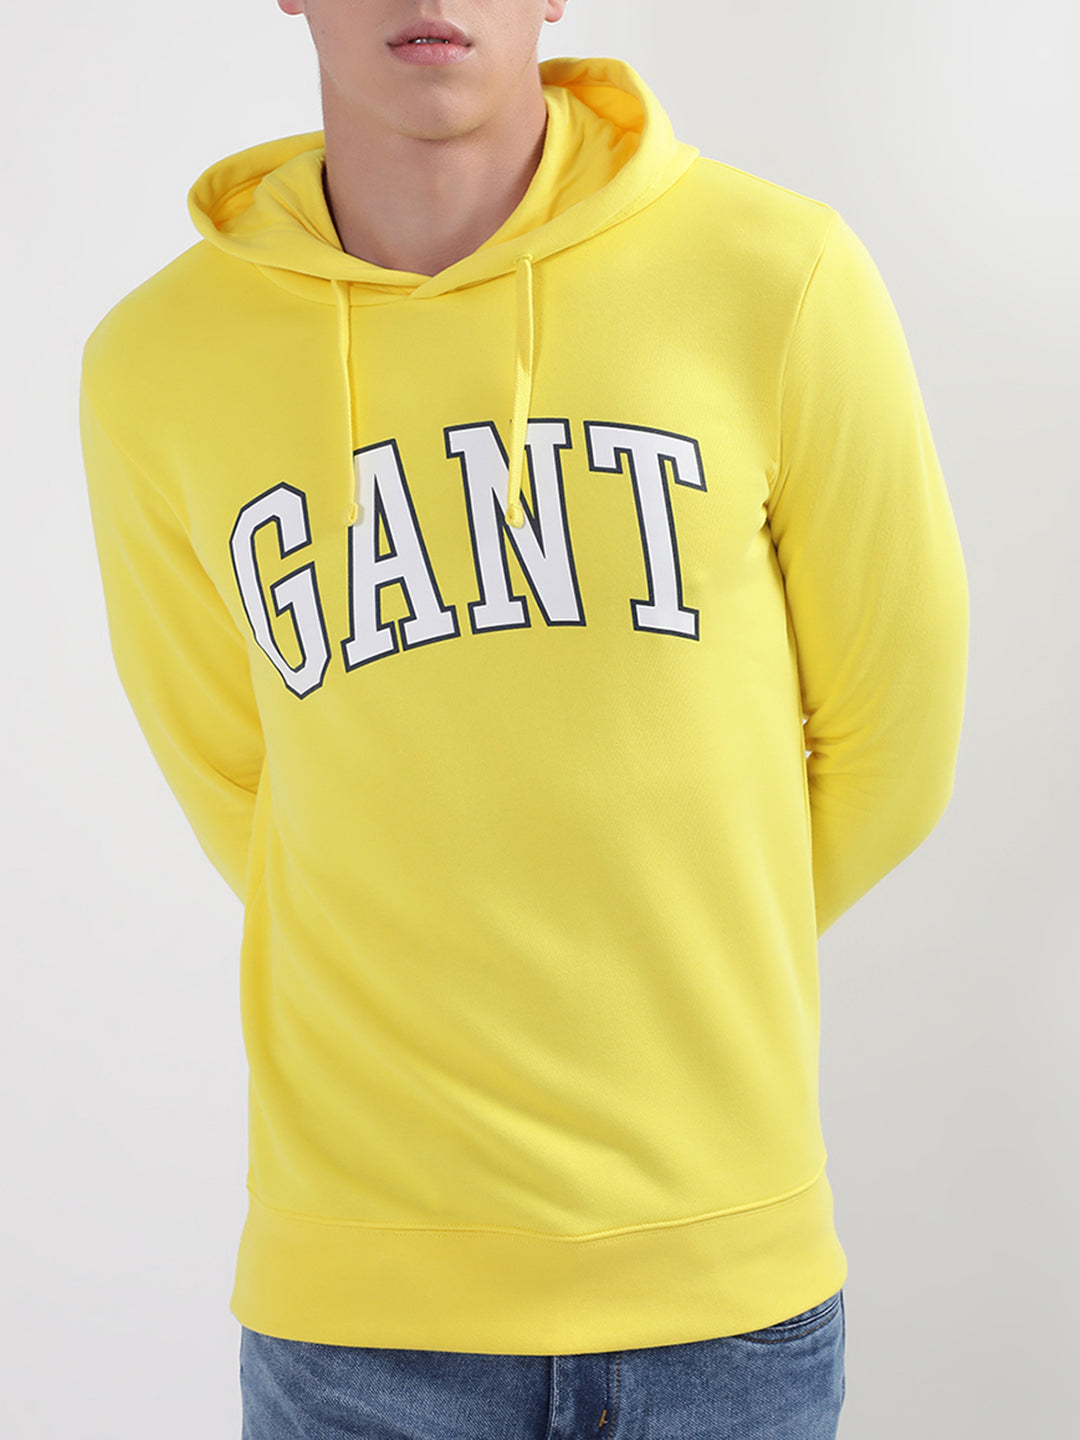 Gant Men Yellow Solid Hooded Sweatshirt